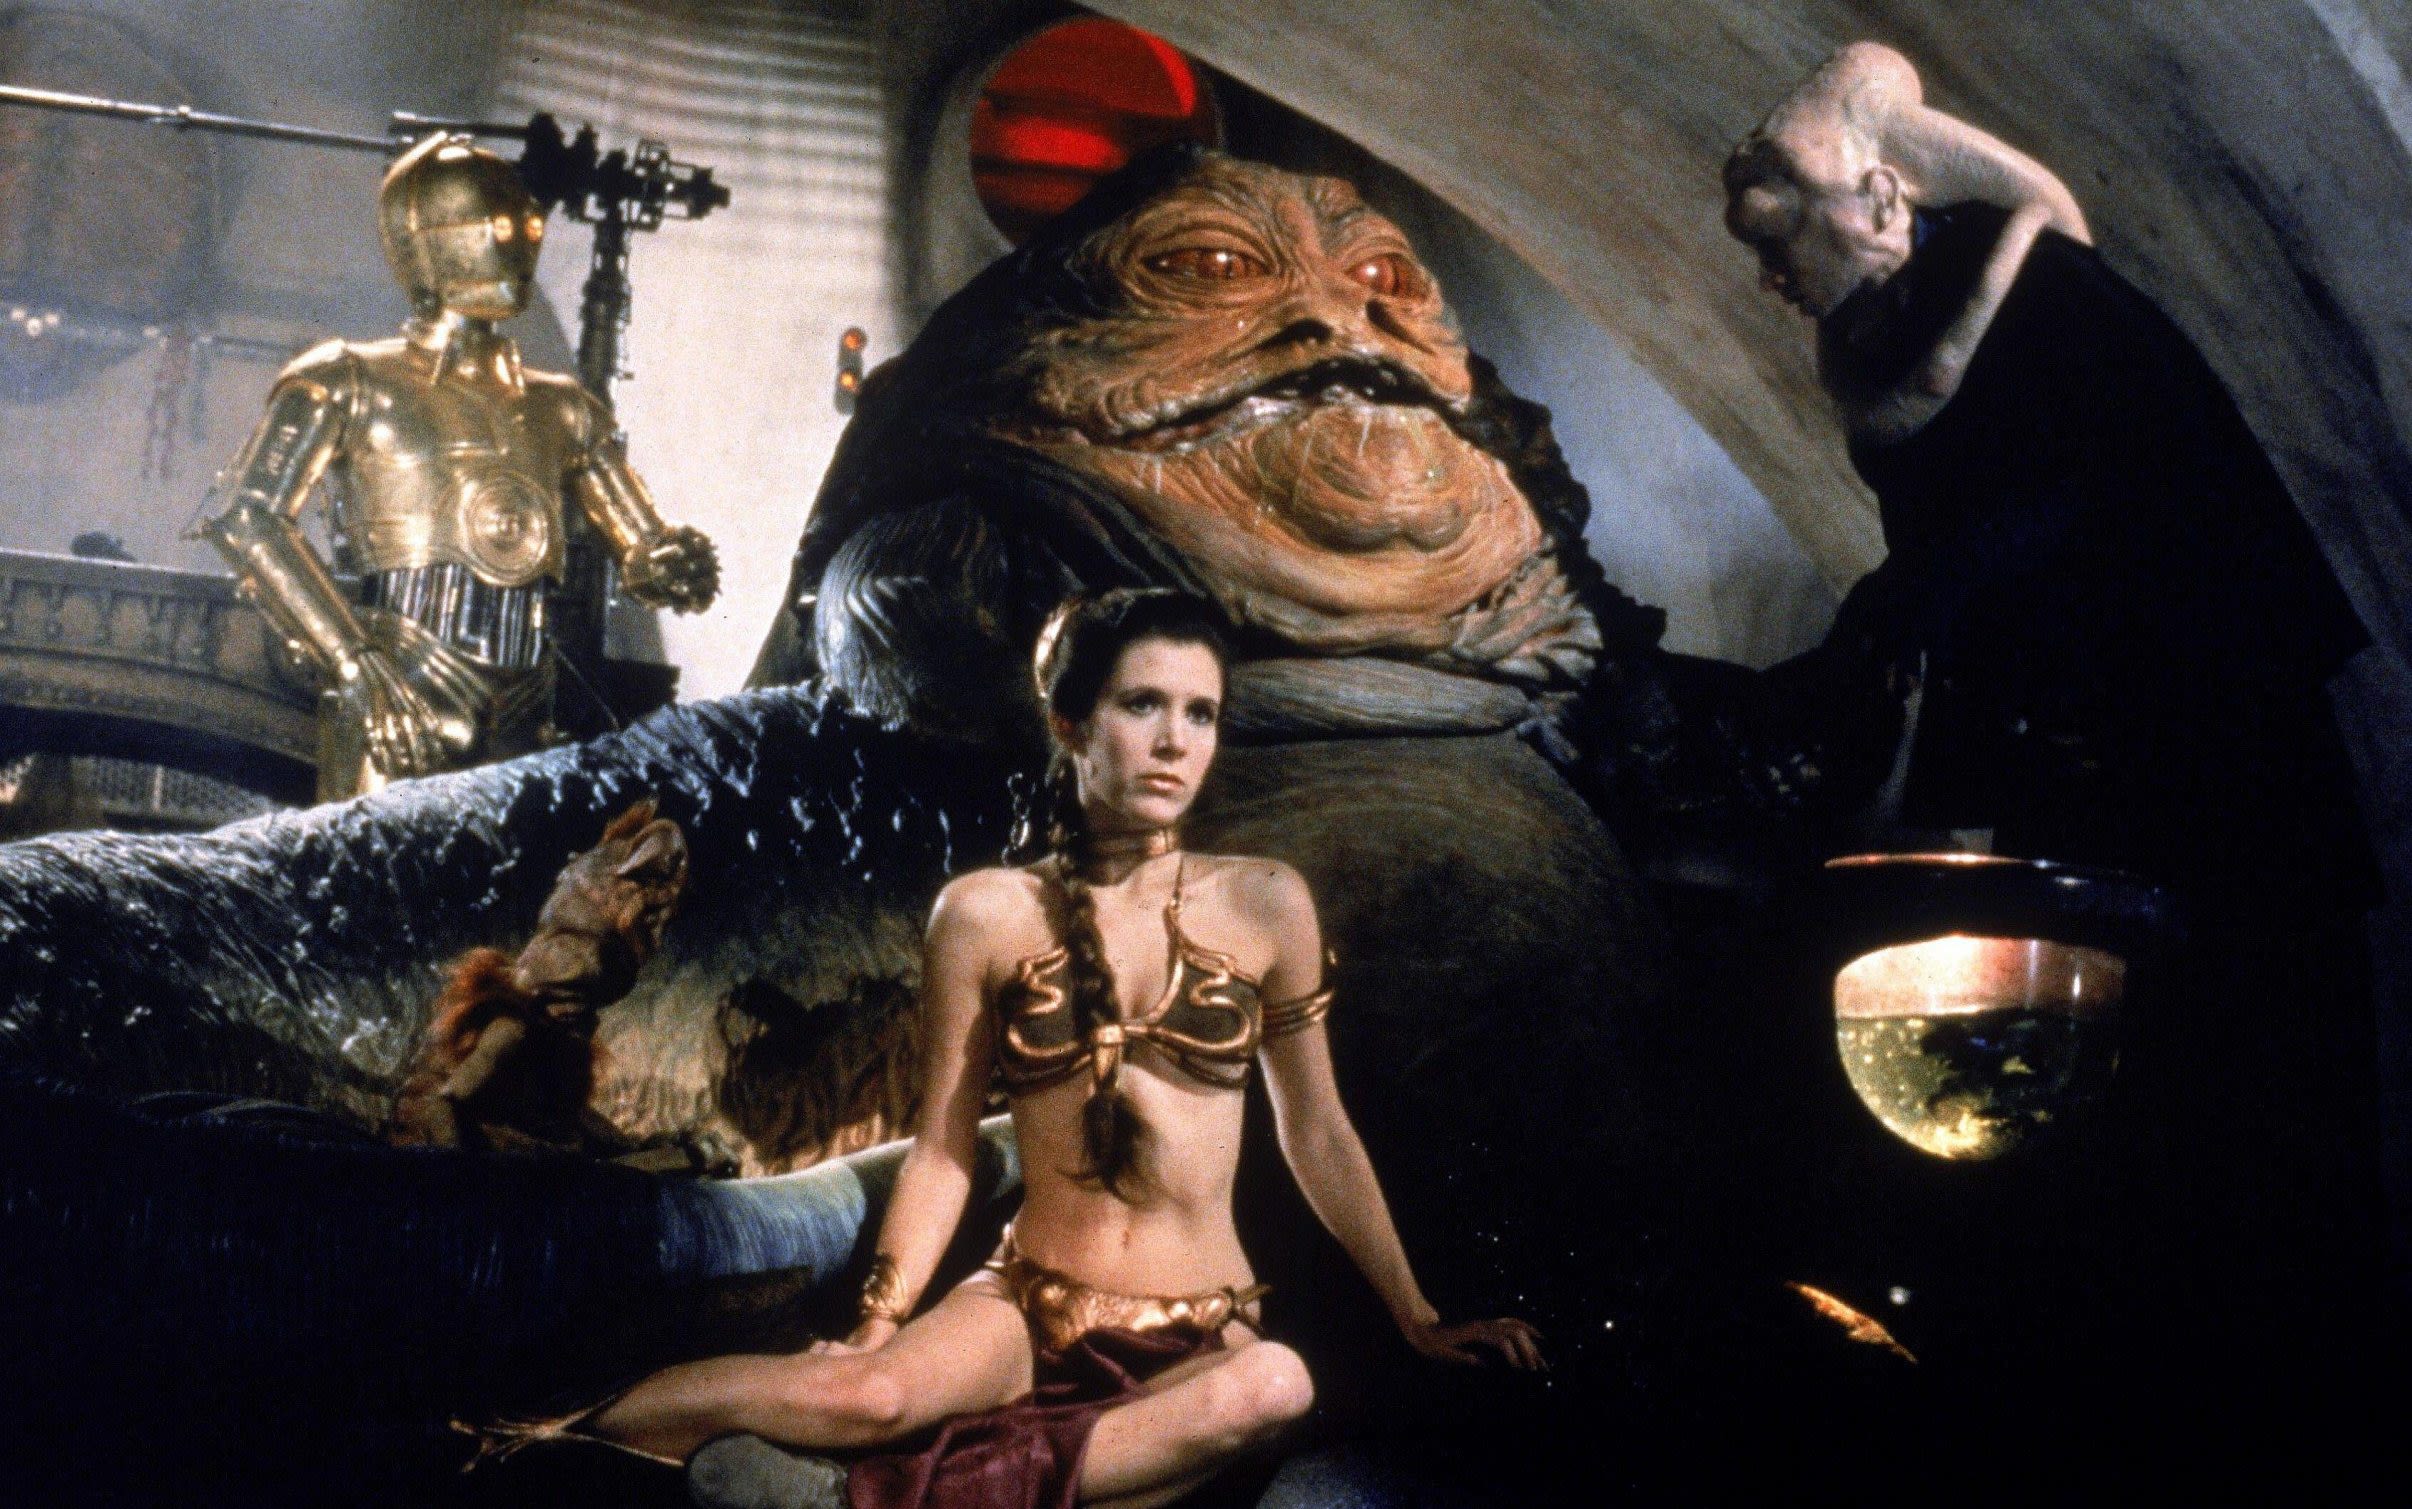 Star Wars bikini costume worn by Princess Leia sells for more than £130,000